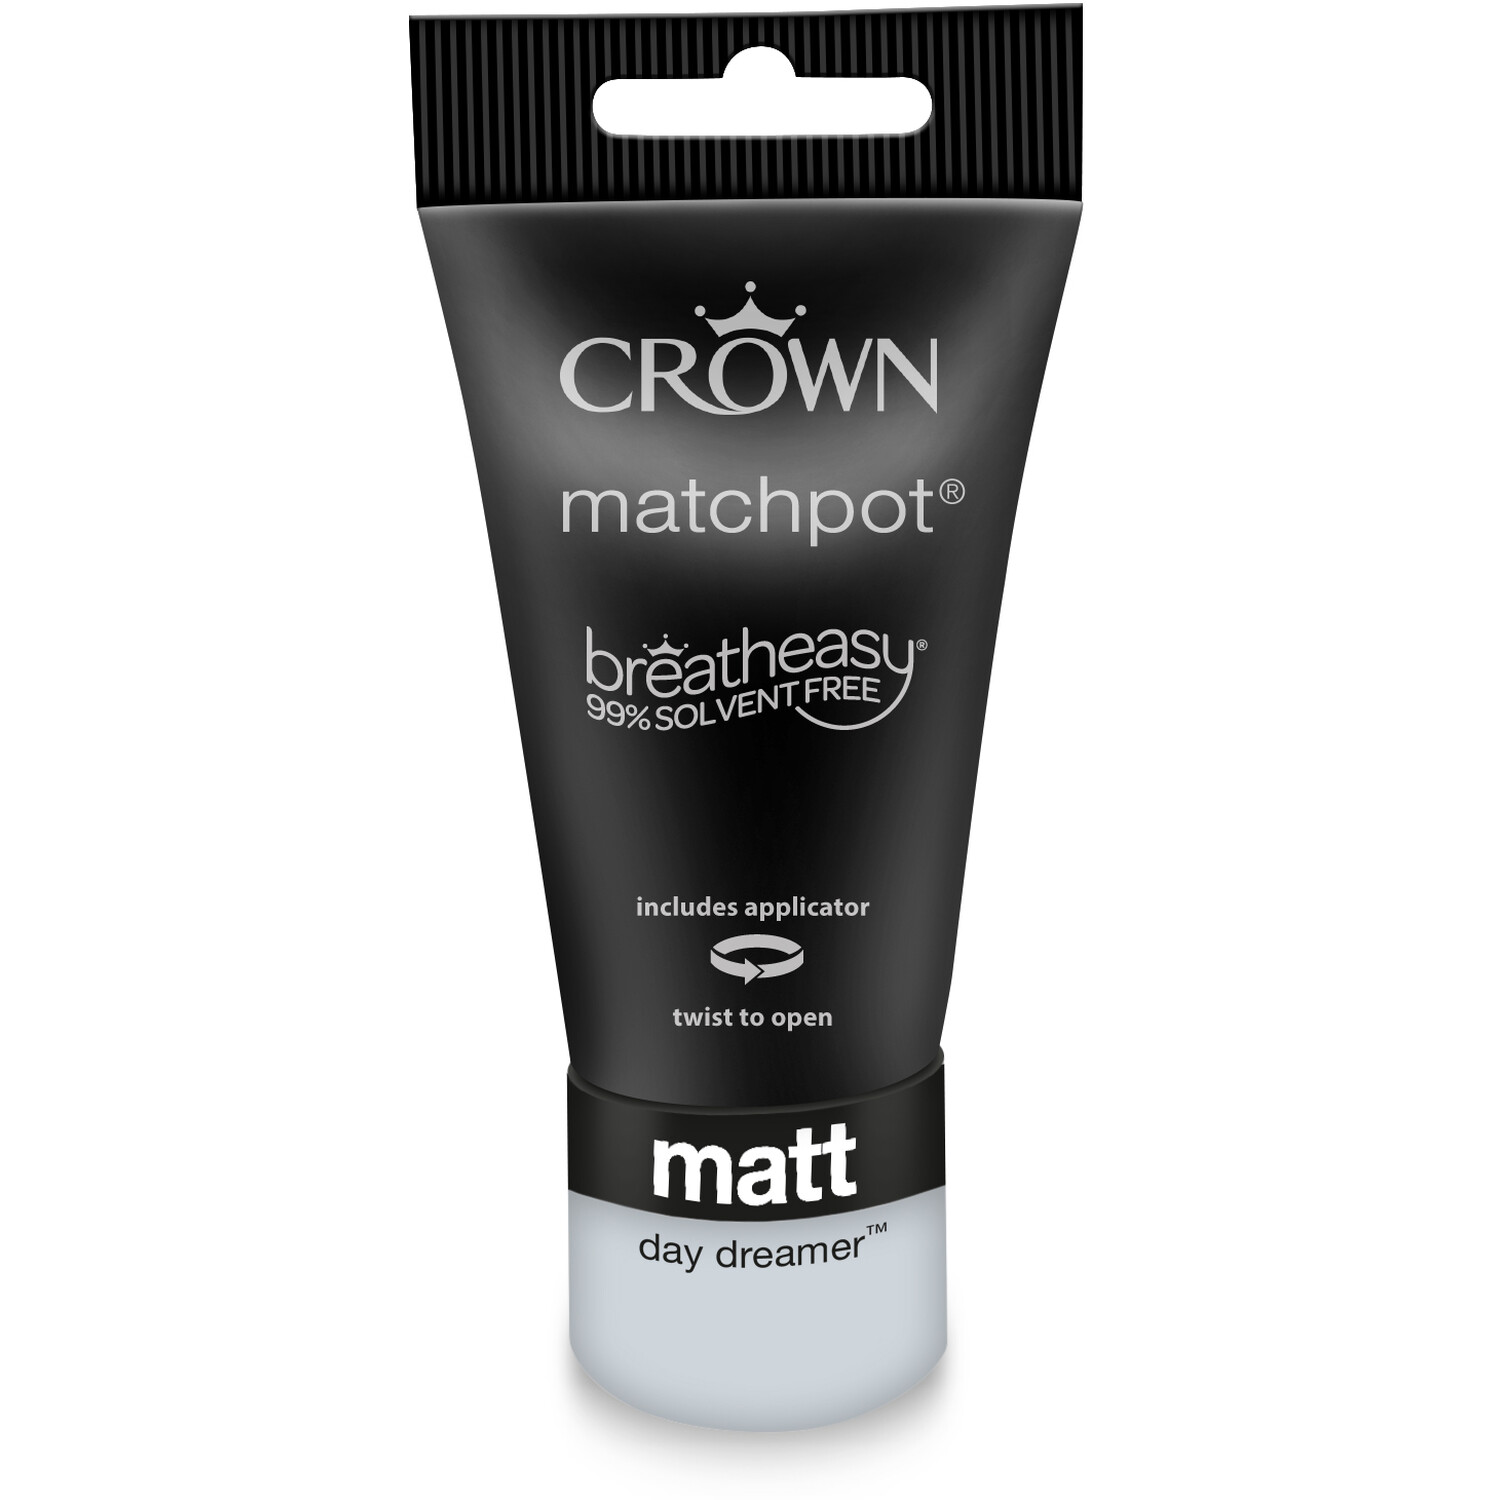 Crown Breatheasy Day Dreamer Matt Feature Wall Tester Pot 40ml Image